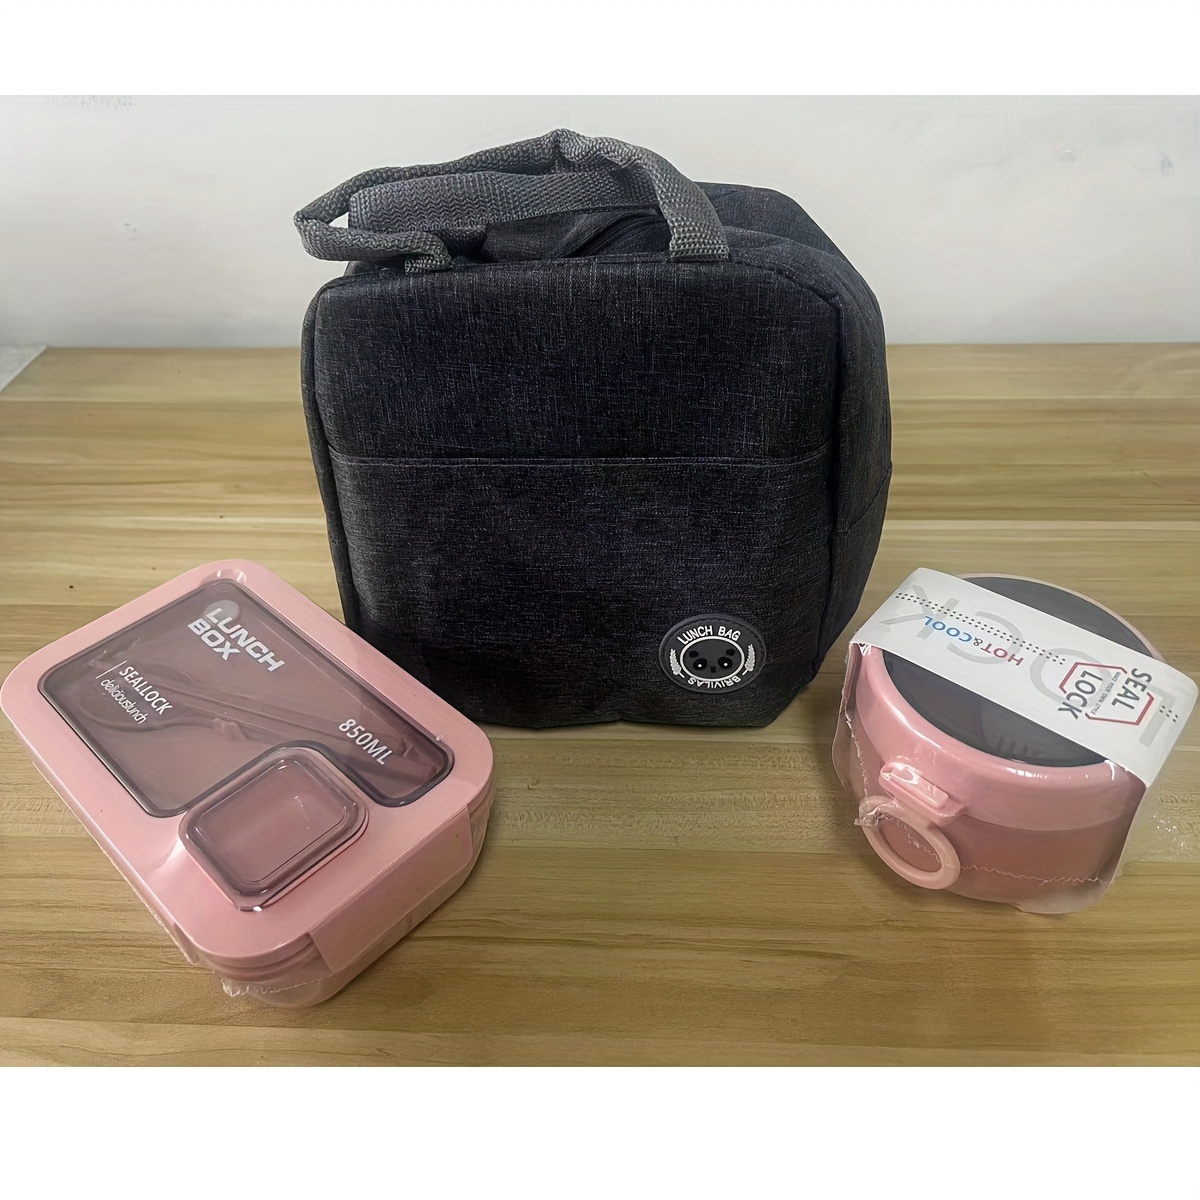 Kit de lonchera Bento con bolsa y con bolsa para hielo la comida